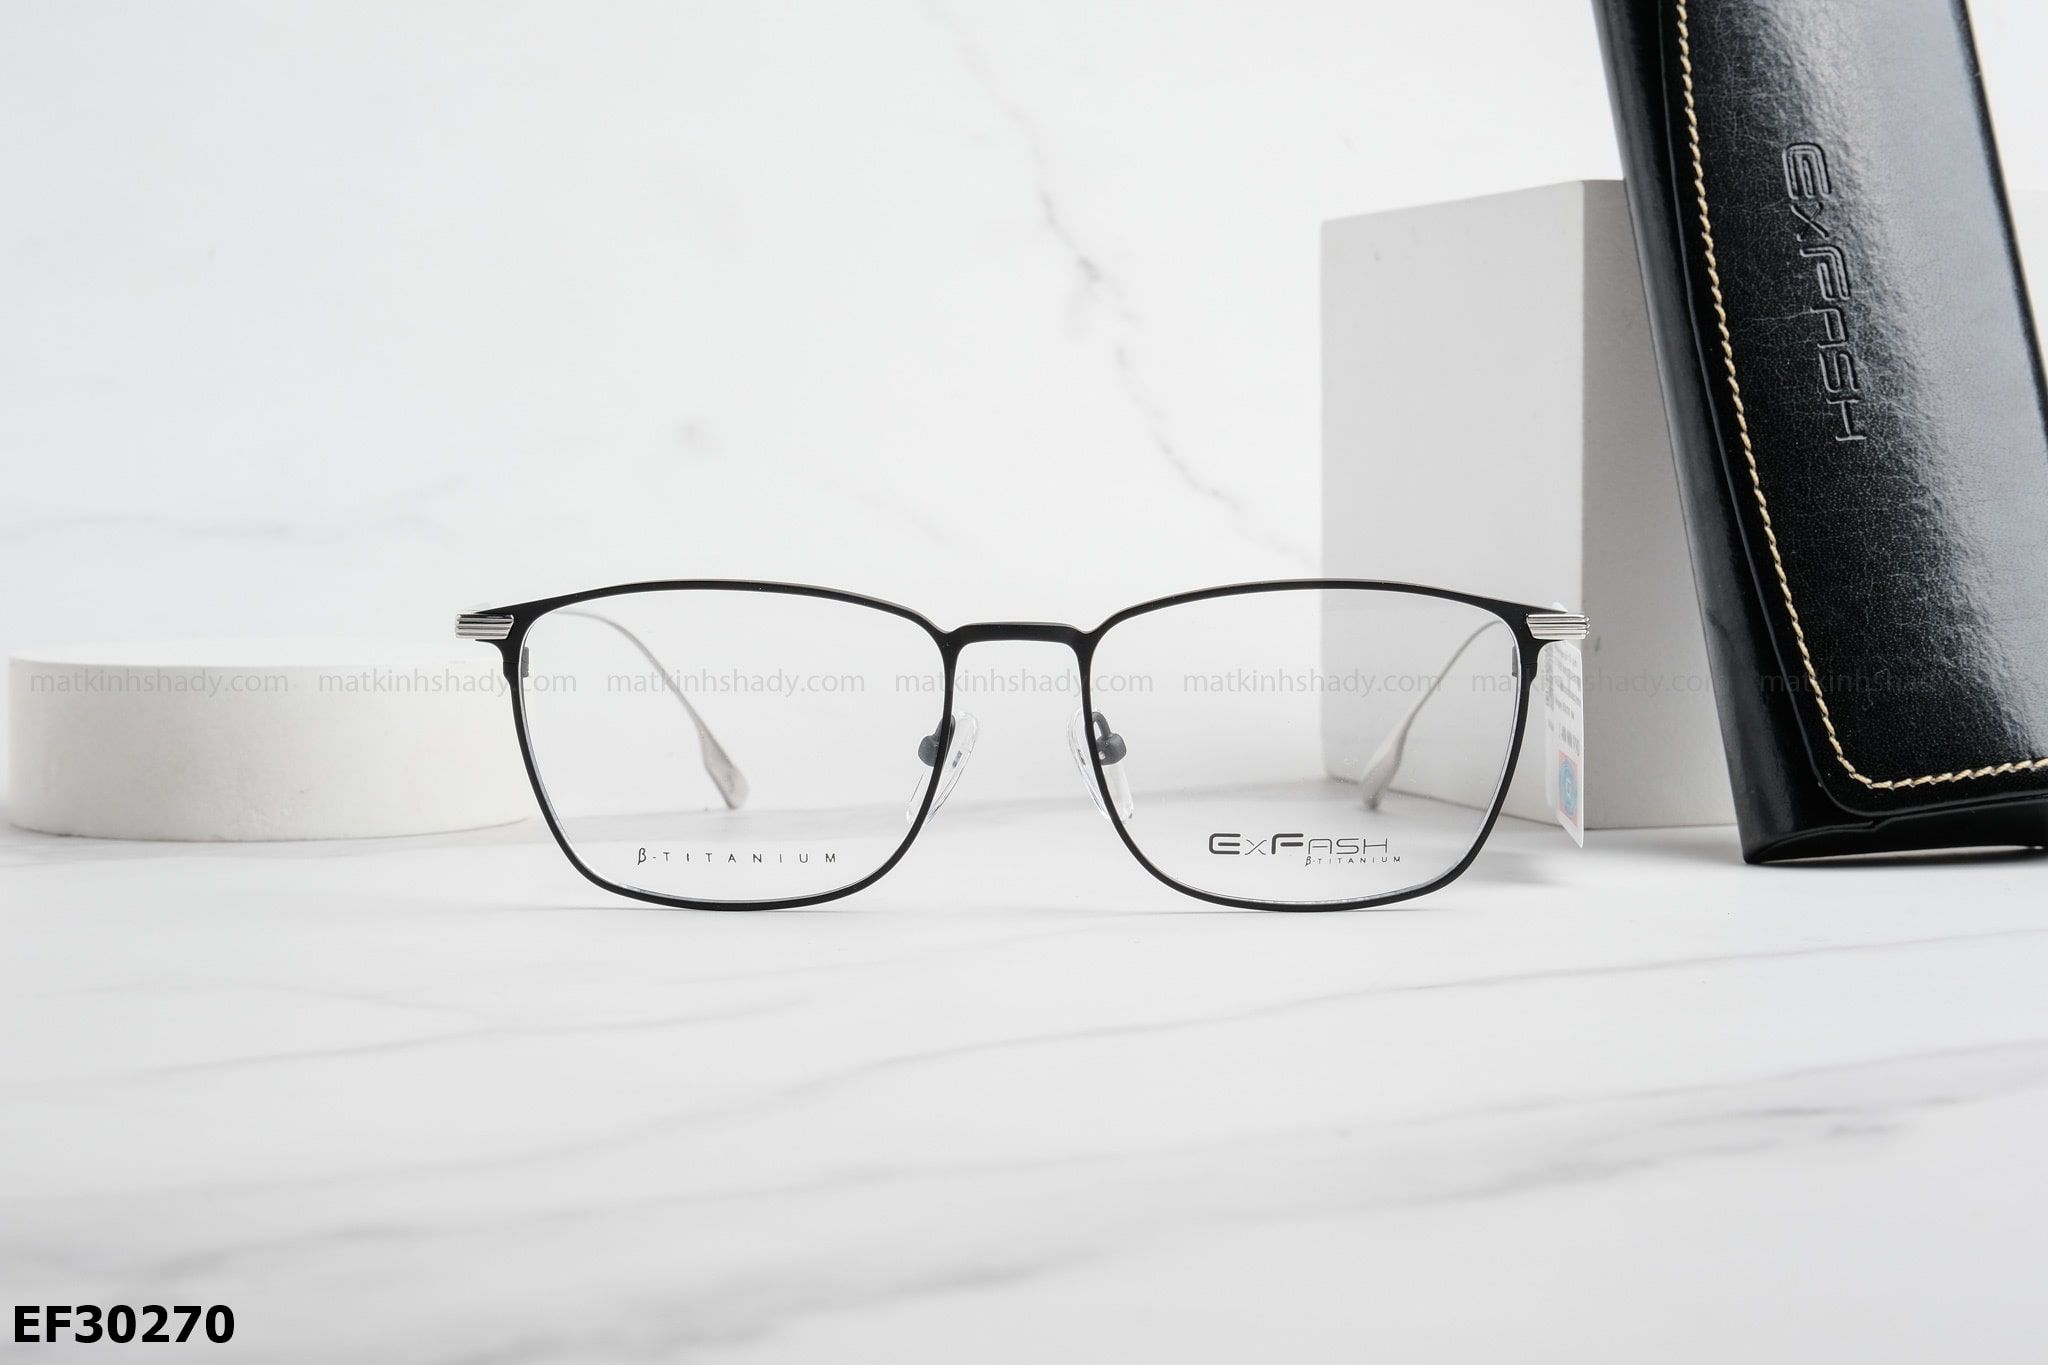  Exfash Eyewear - Glasses - EF30270 